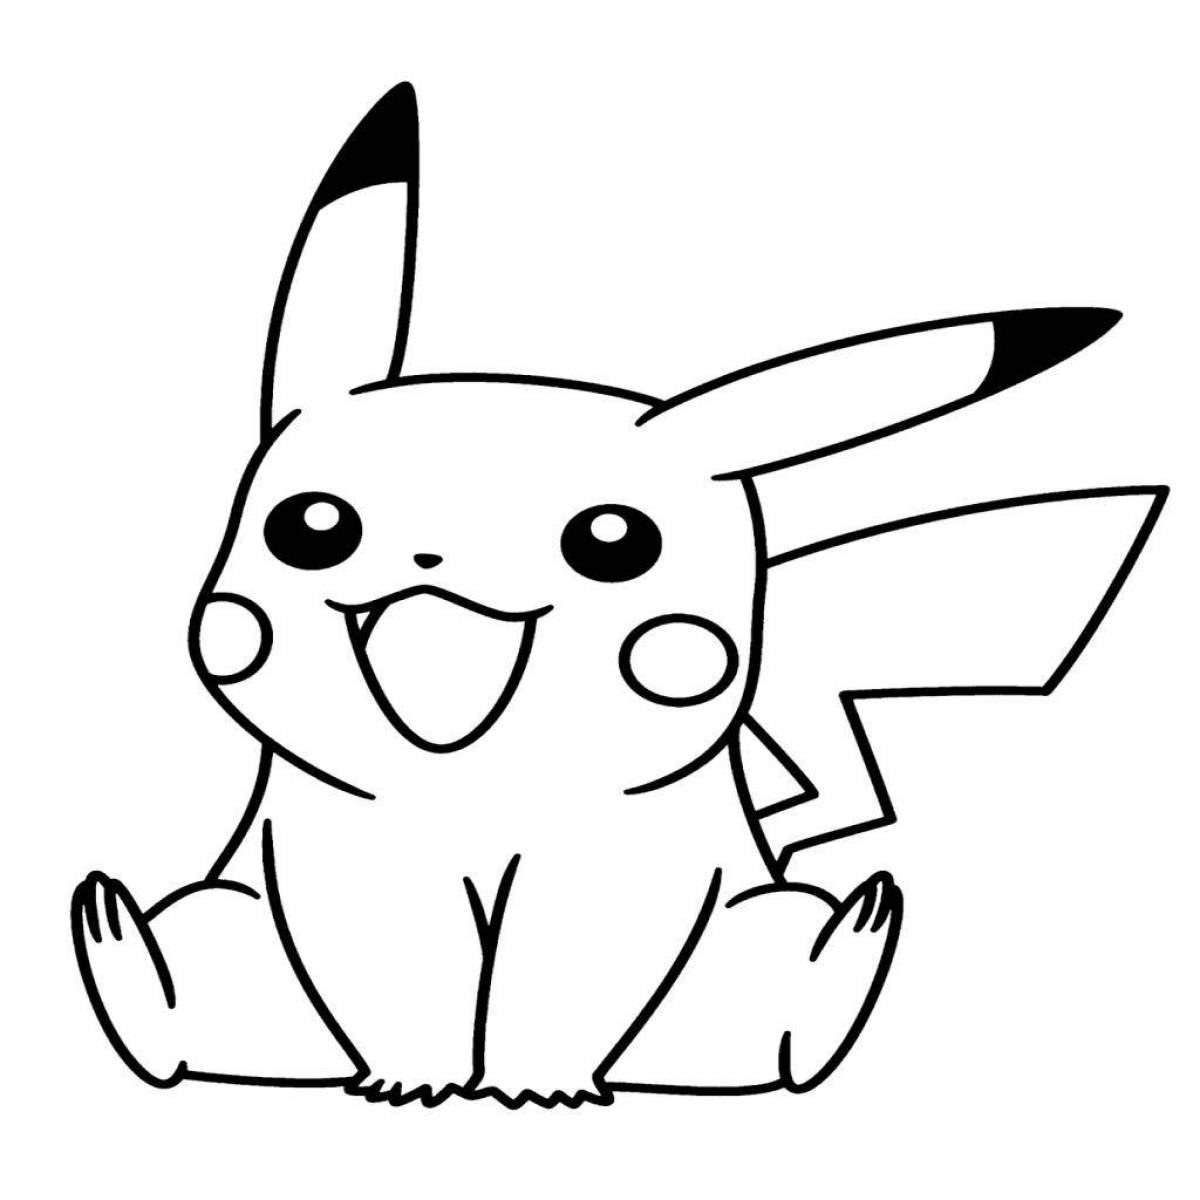 Adorable pusheen pikachu coloring page